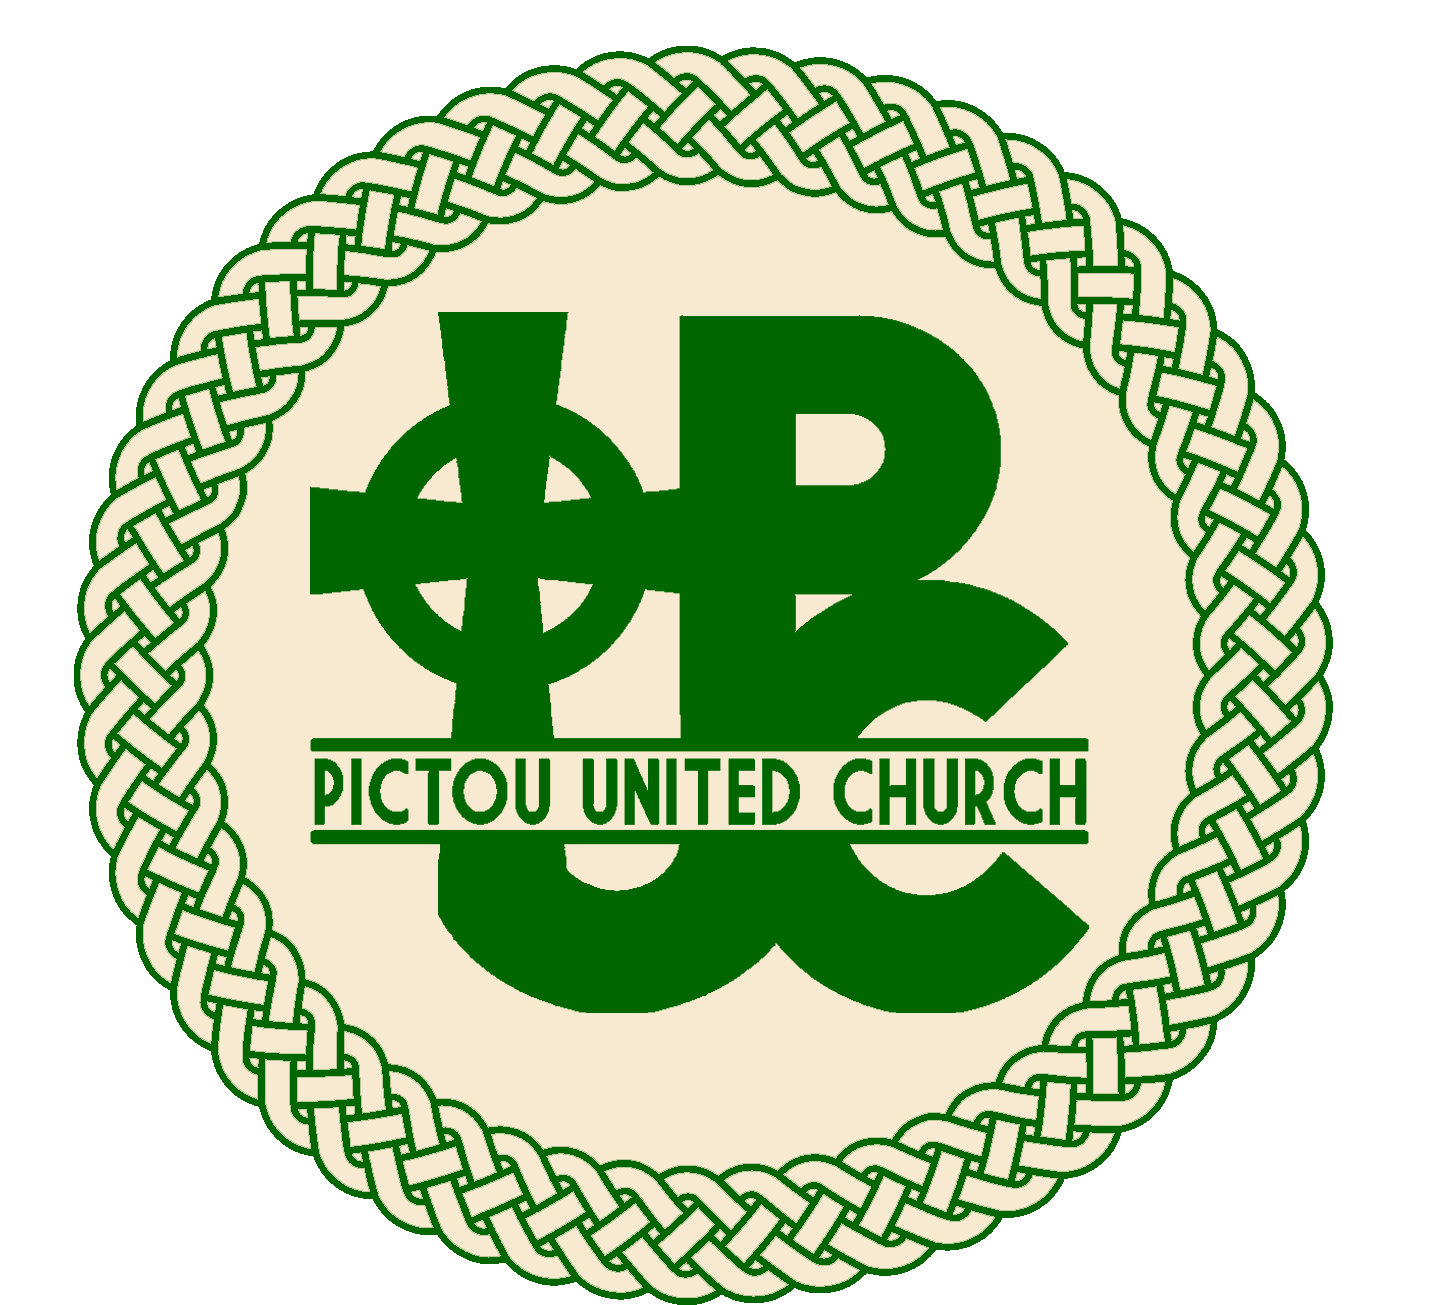 Pictou United Church logo